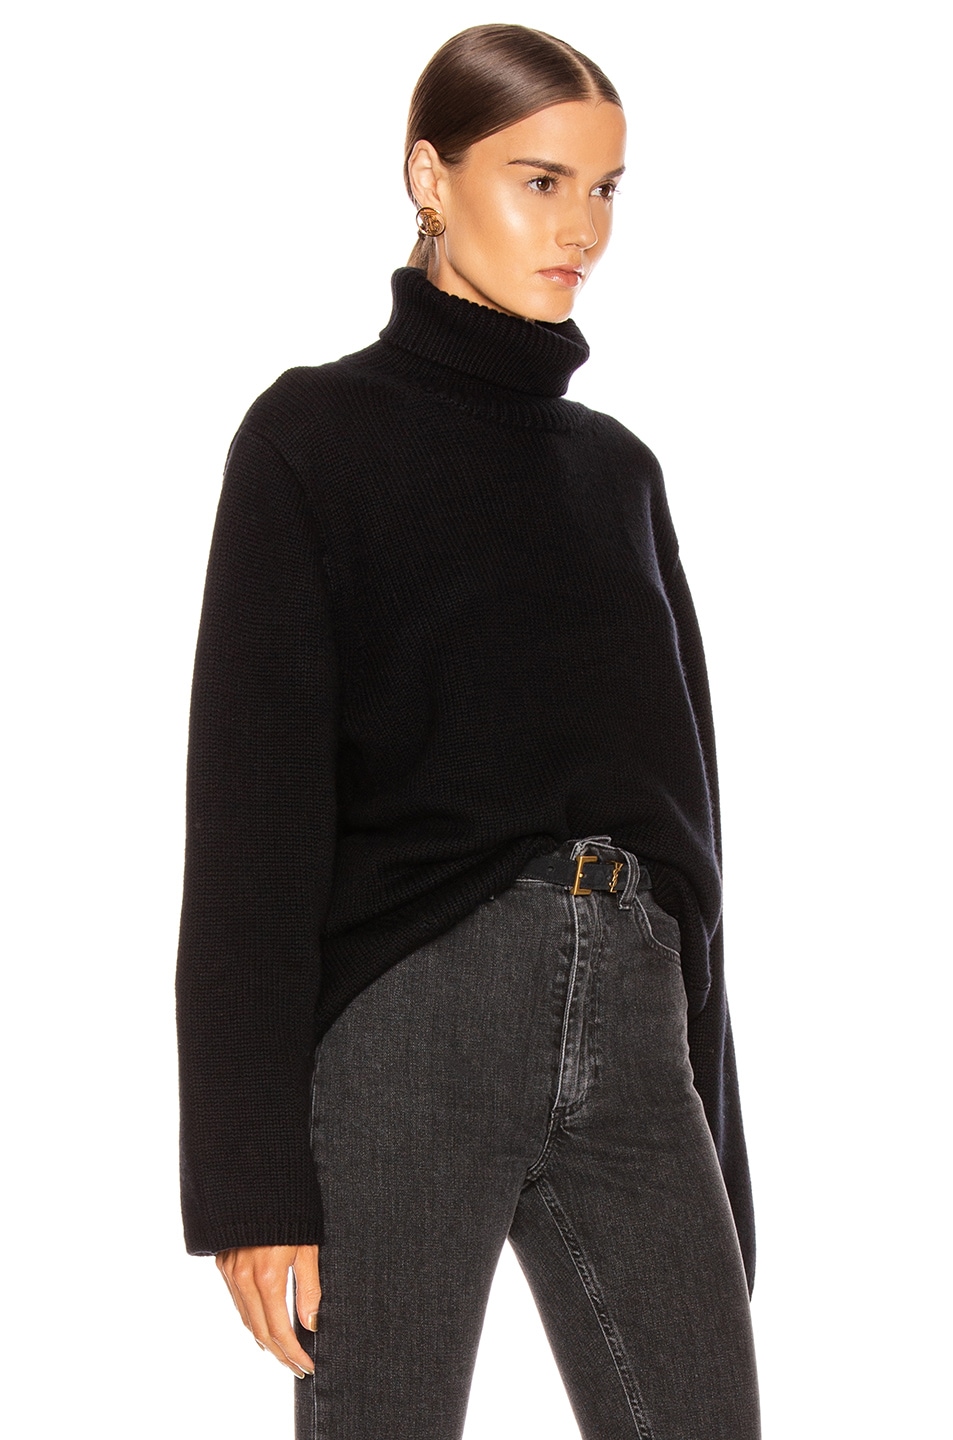 Toteme Cambridge Sweater in Black | FWRD